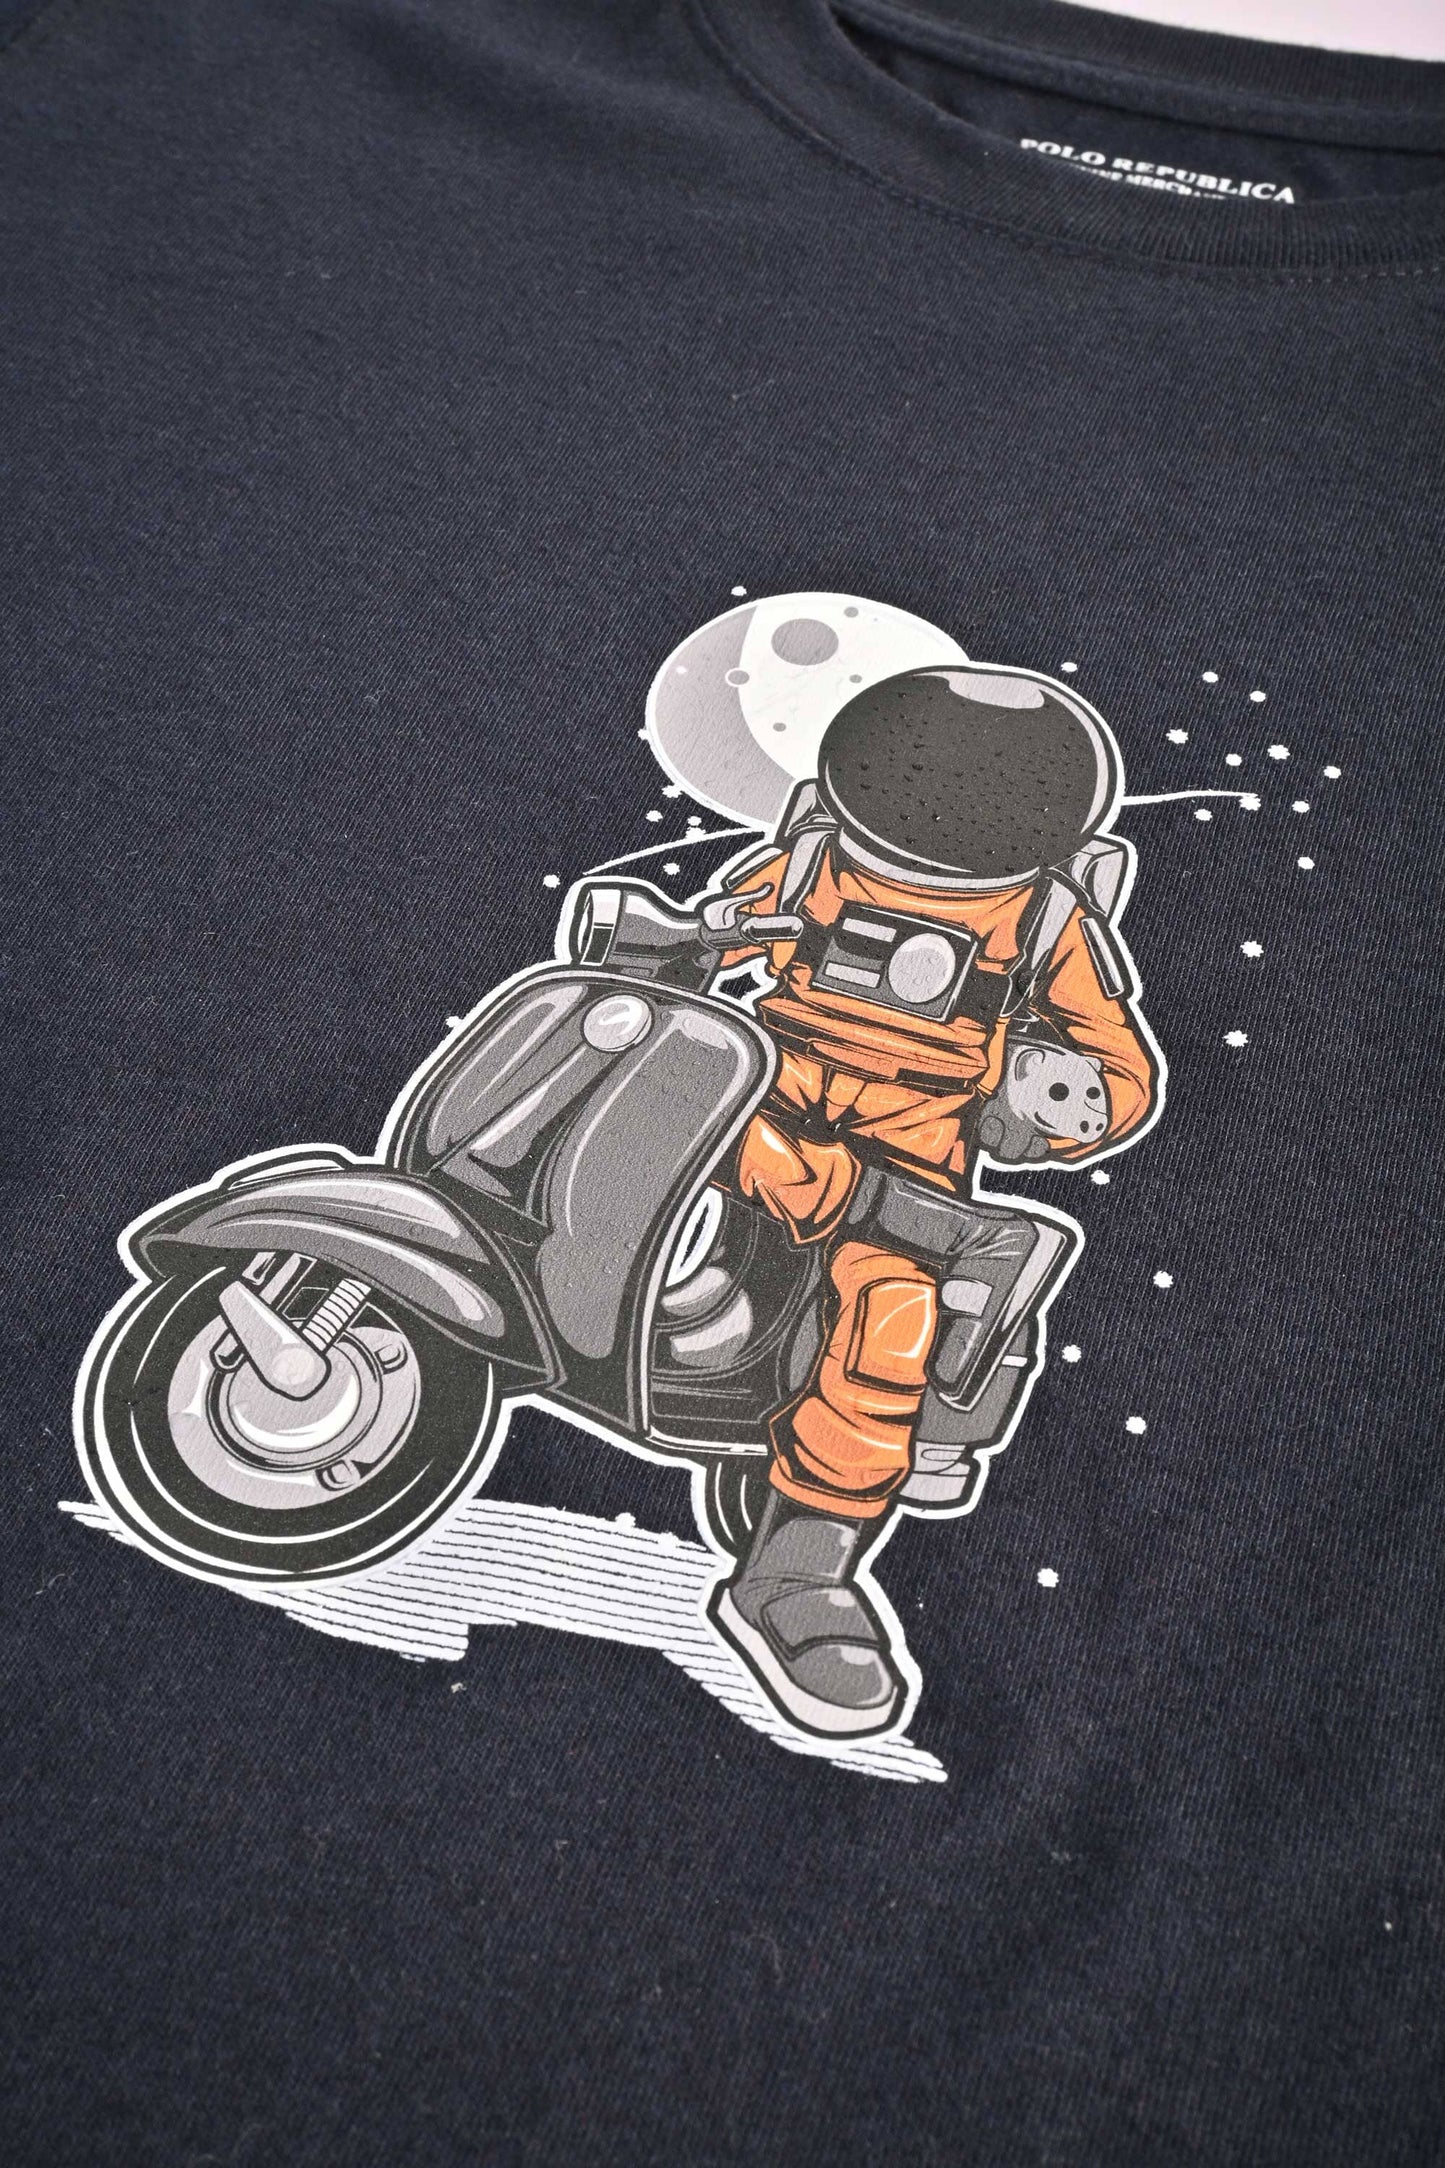 Polo Republica Boy's Astronaut Vespa Street Style Printed Tee Shirt Boy's Tee Shirt Polo Republica 